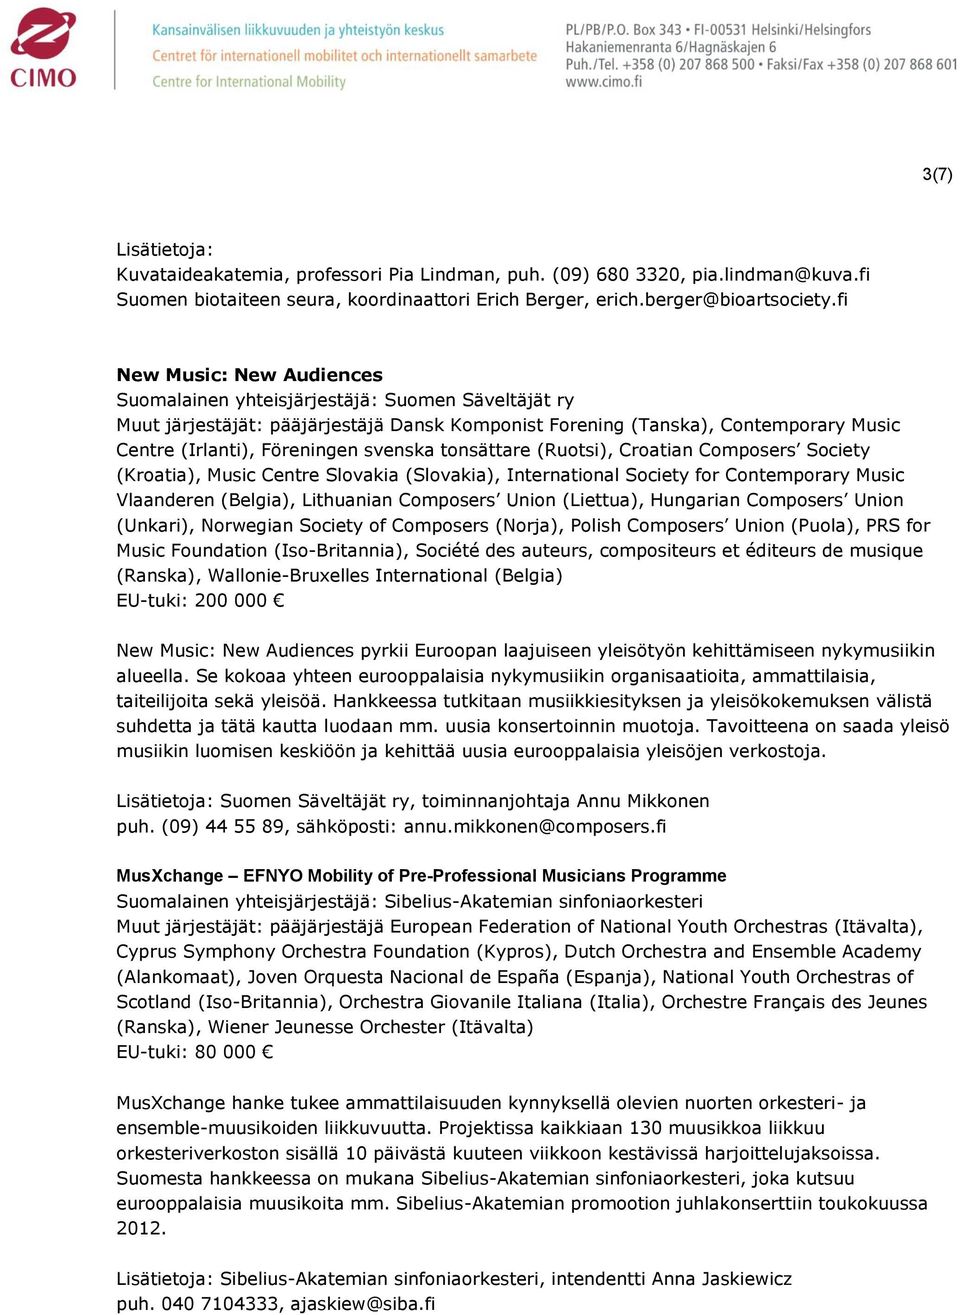 svenska tonsättare (Ruotsi), Croatian Composers Society (Kroatia), Music Centre Slovakia (Slovakia), International Society for Contemporary Music Vlaanderen (Belgia), Lithuanian Composers Union